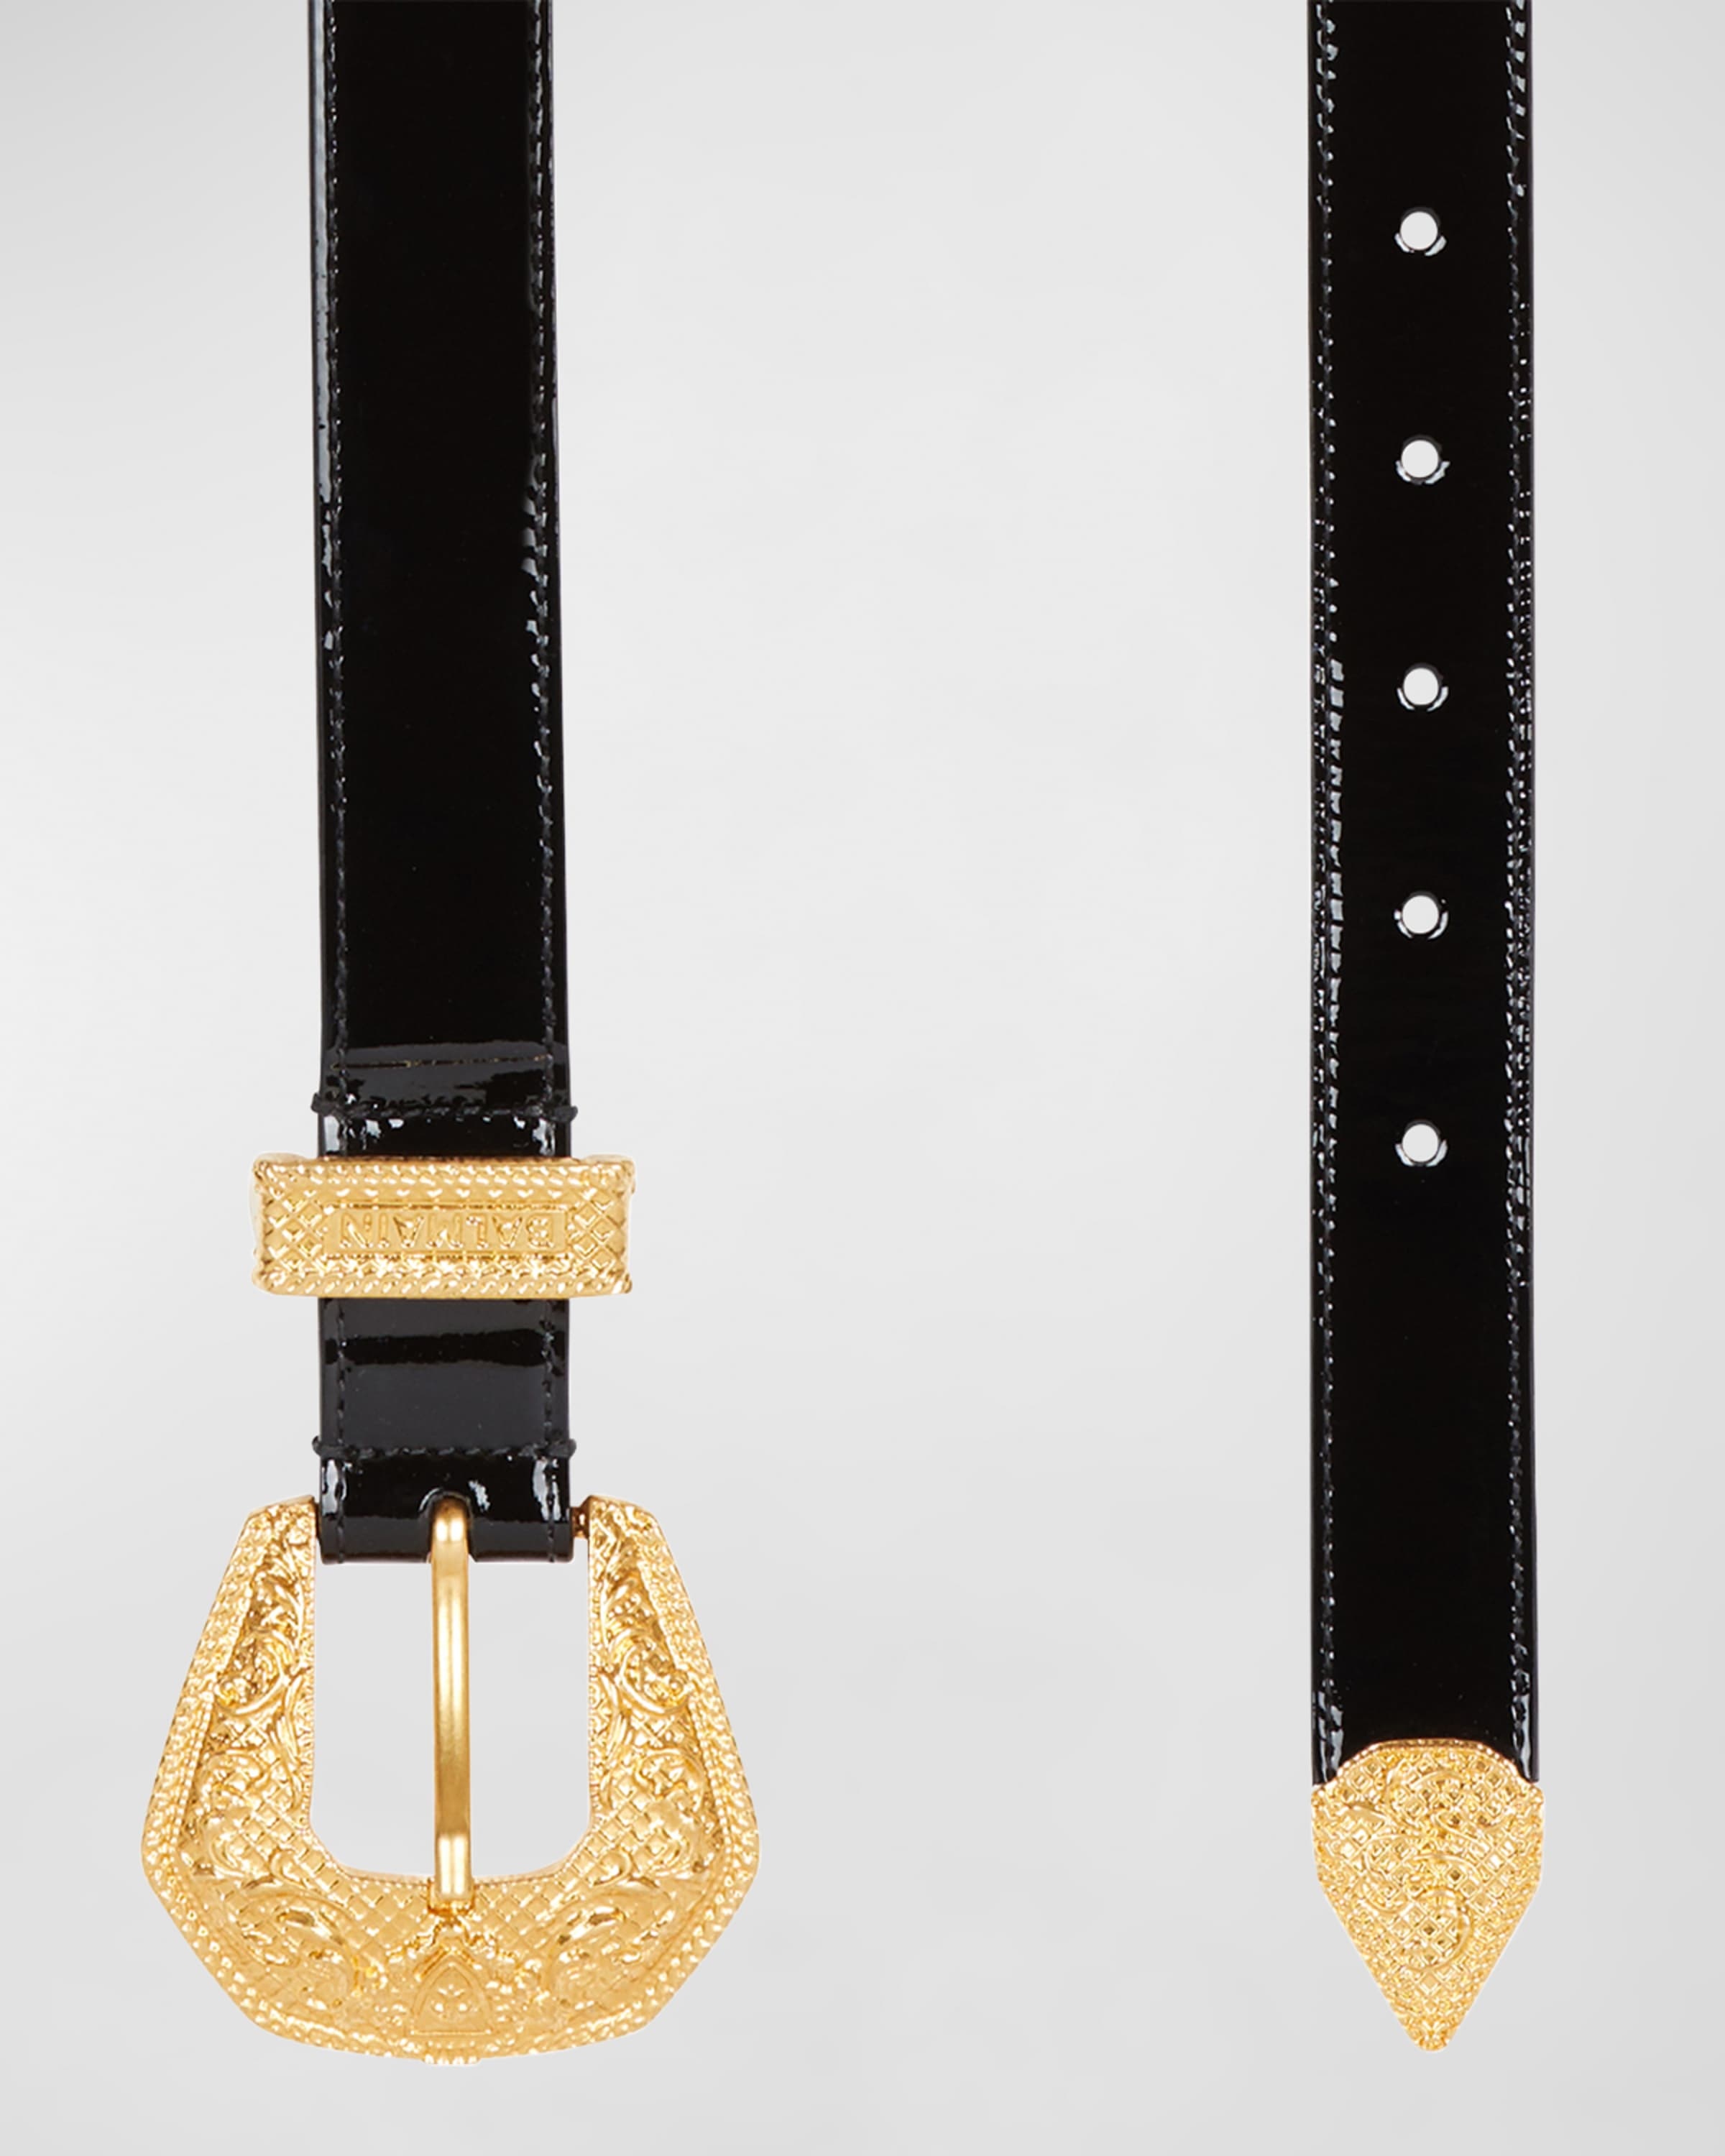 Western Patent Leather & Brass Belt - 3